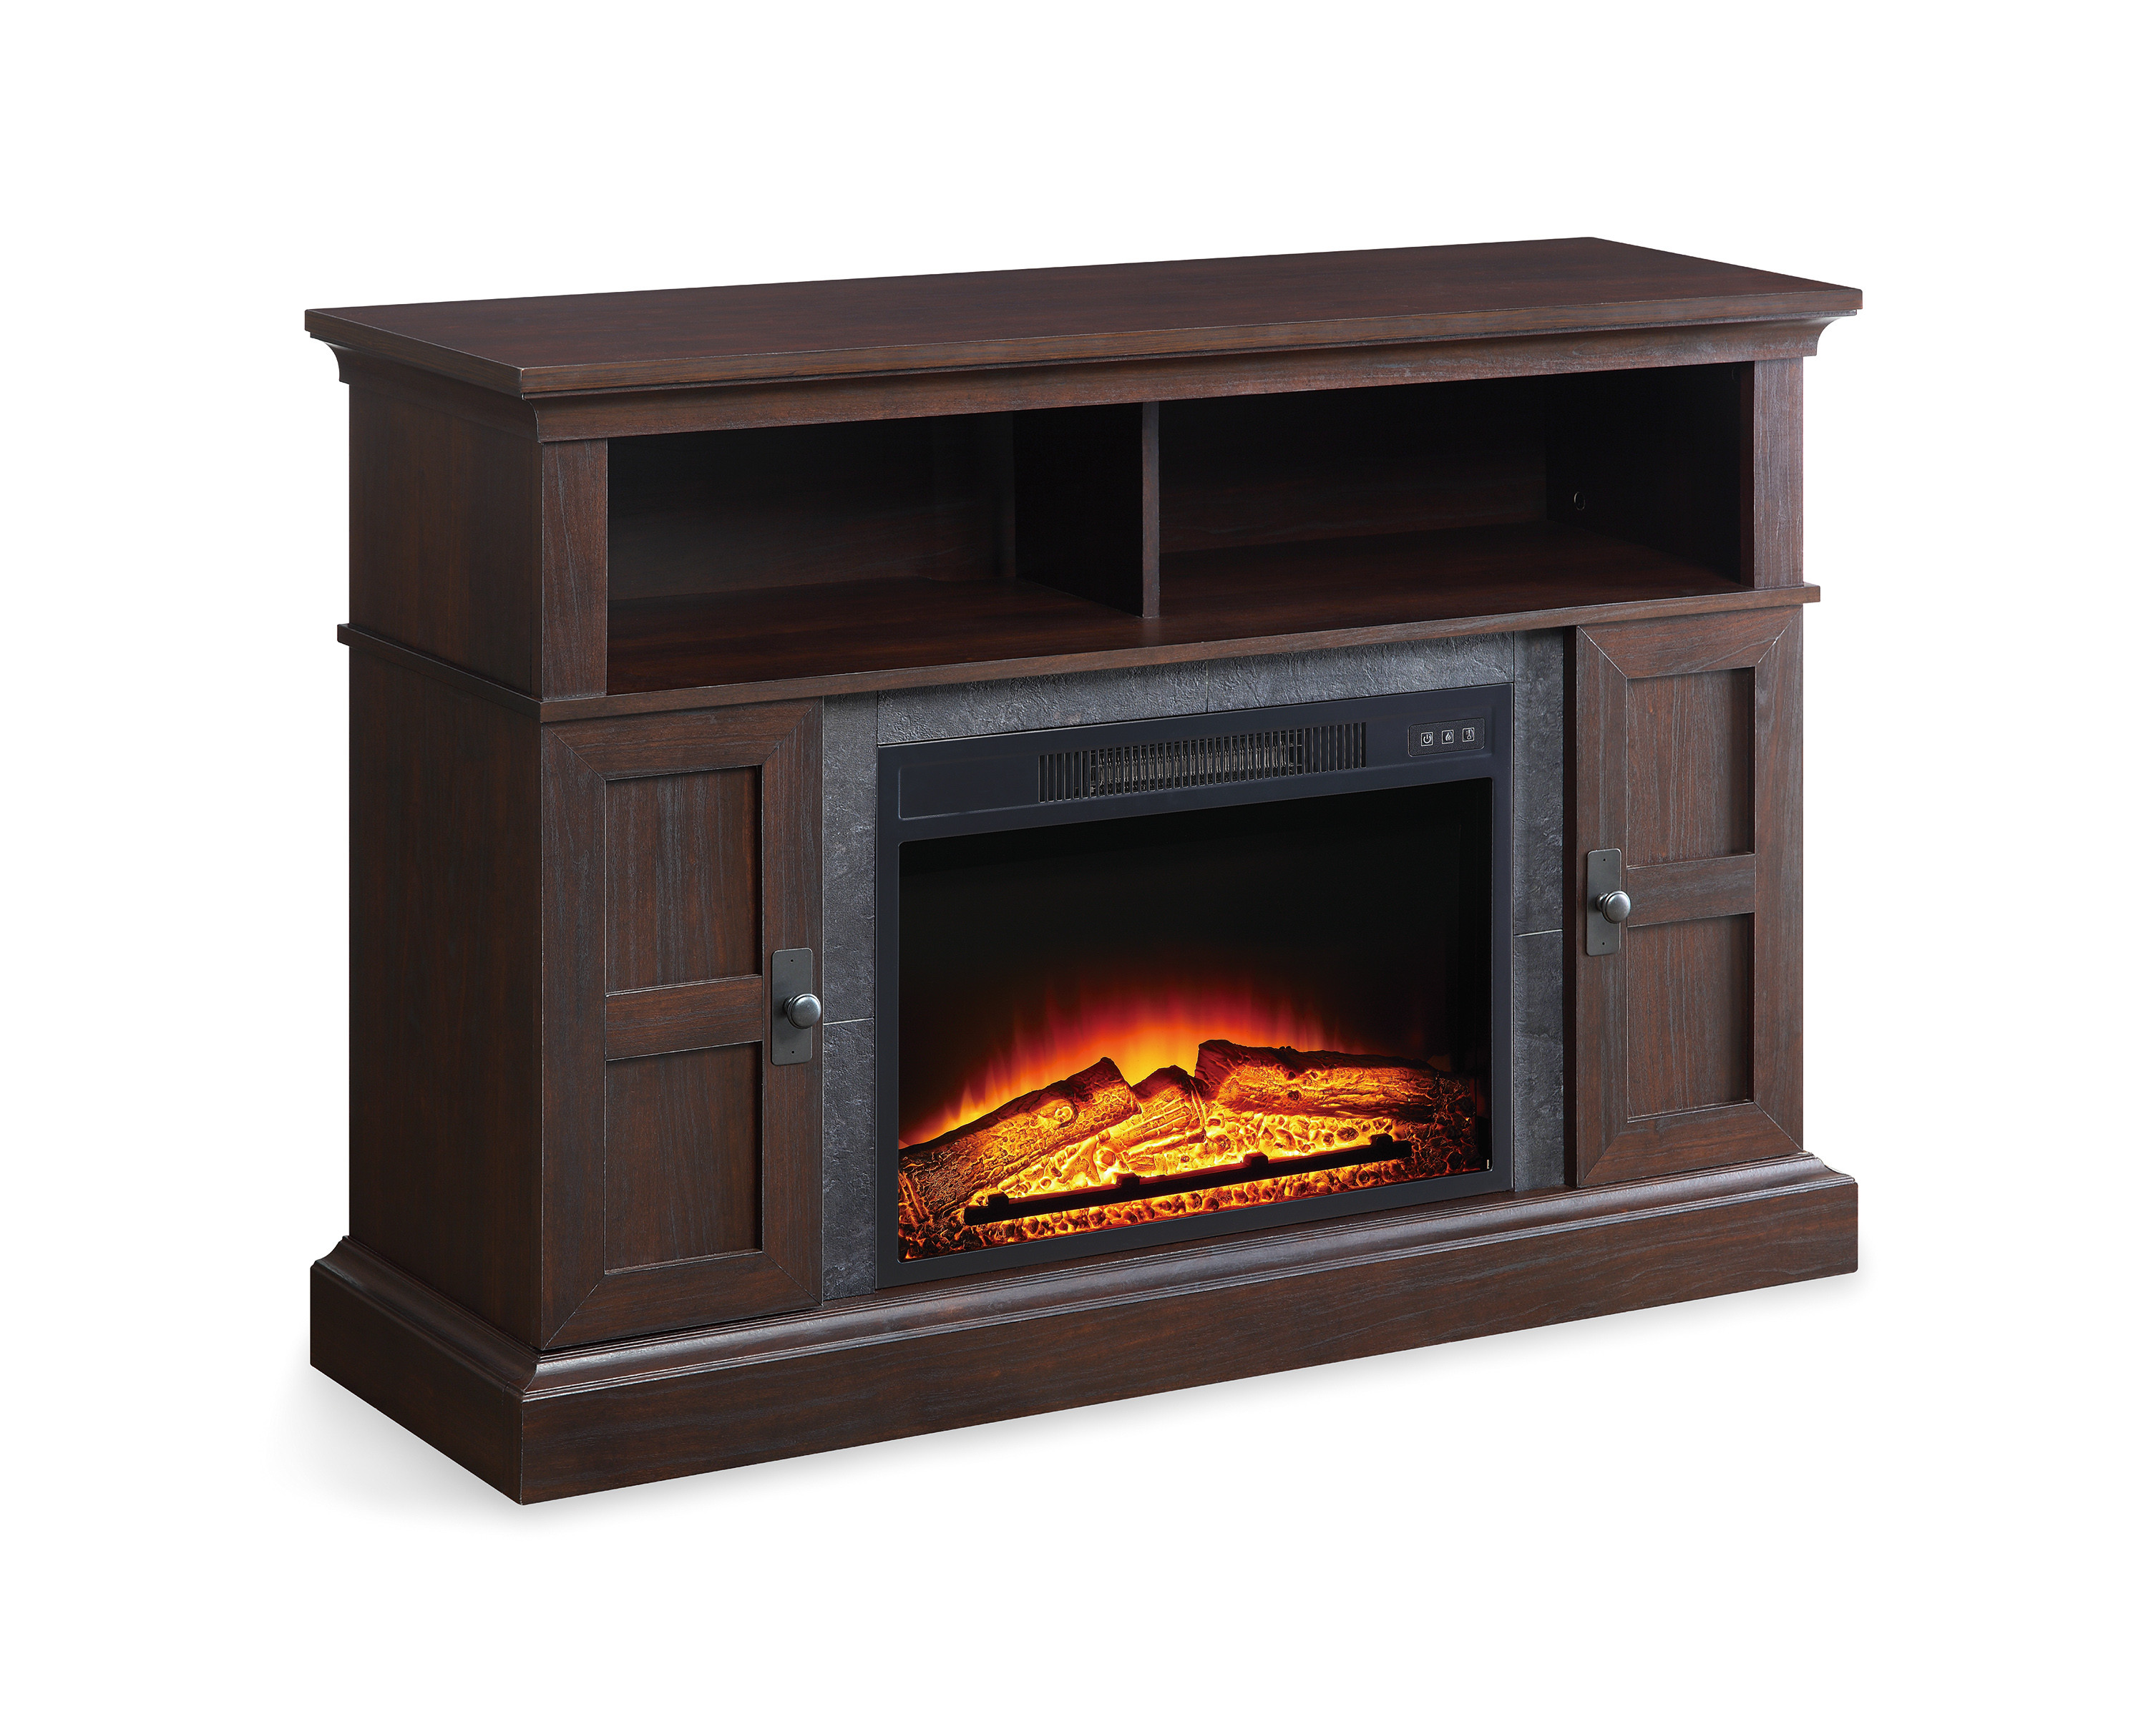 Best ideas about Whalen Media Fireplace
. Save or Pin Whalen Media Fireplace Console for TVs up to 55" Dark Now.